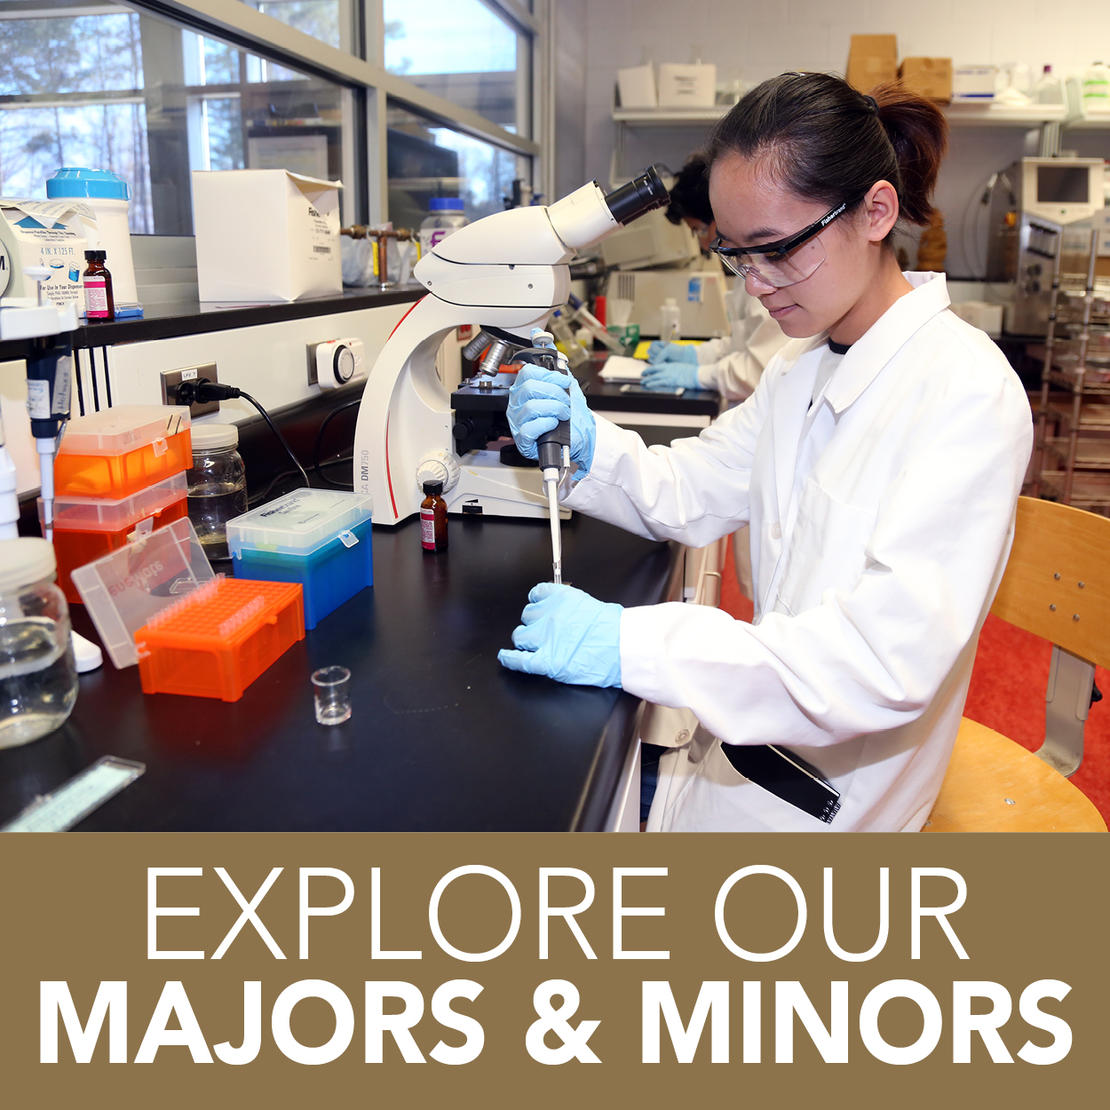 Explore our majors & minors!